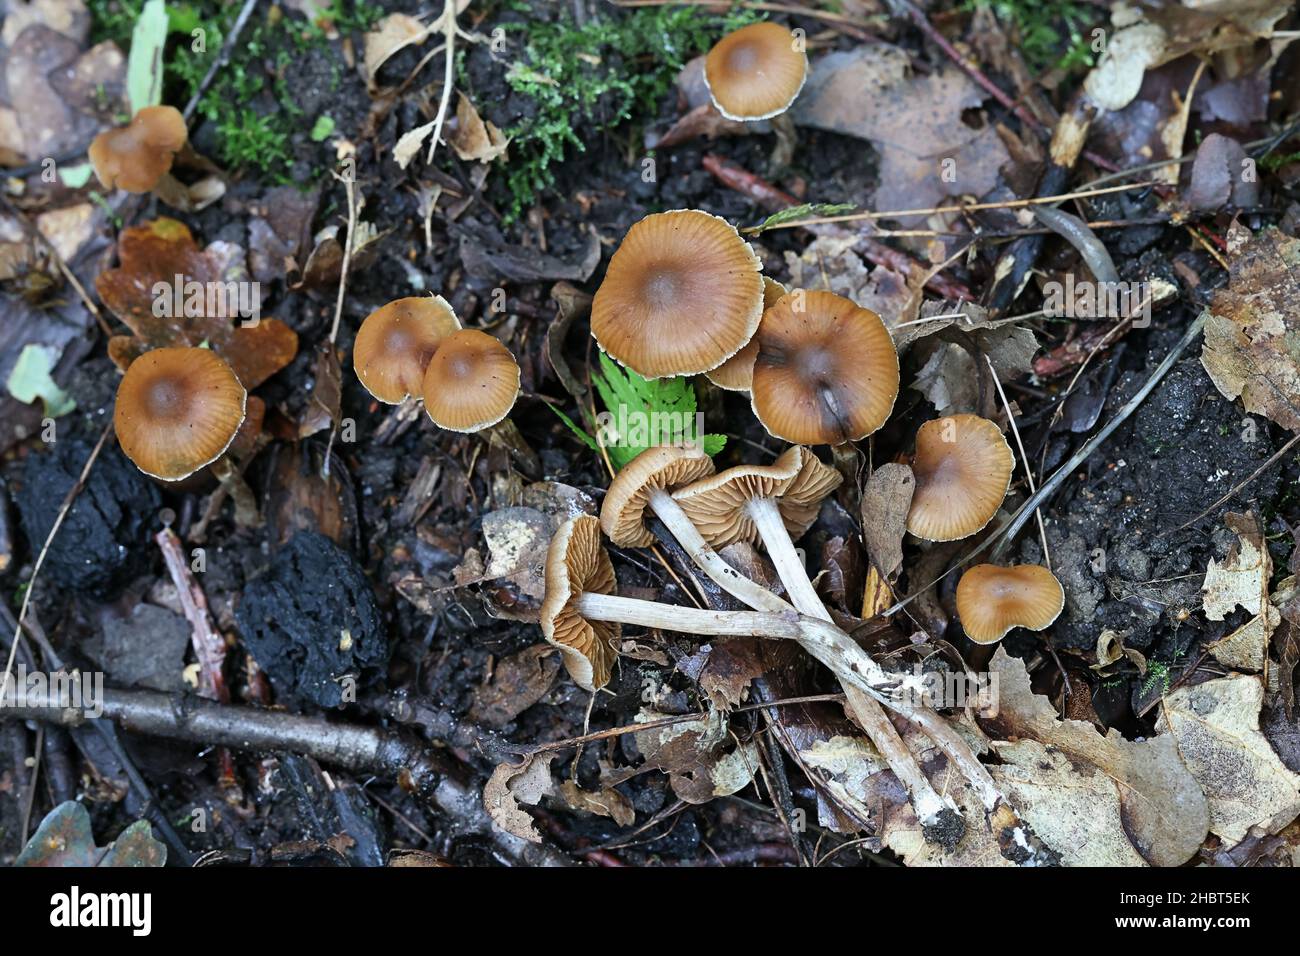 Cortinarius hinnuleus, known as Earthy Webcap, wild mushroom from Finland Stock Photo